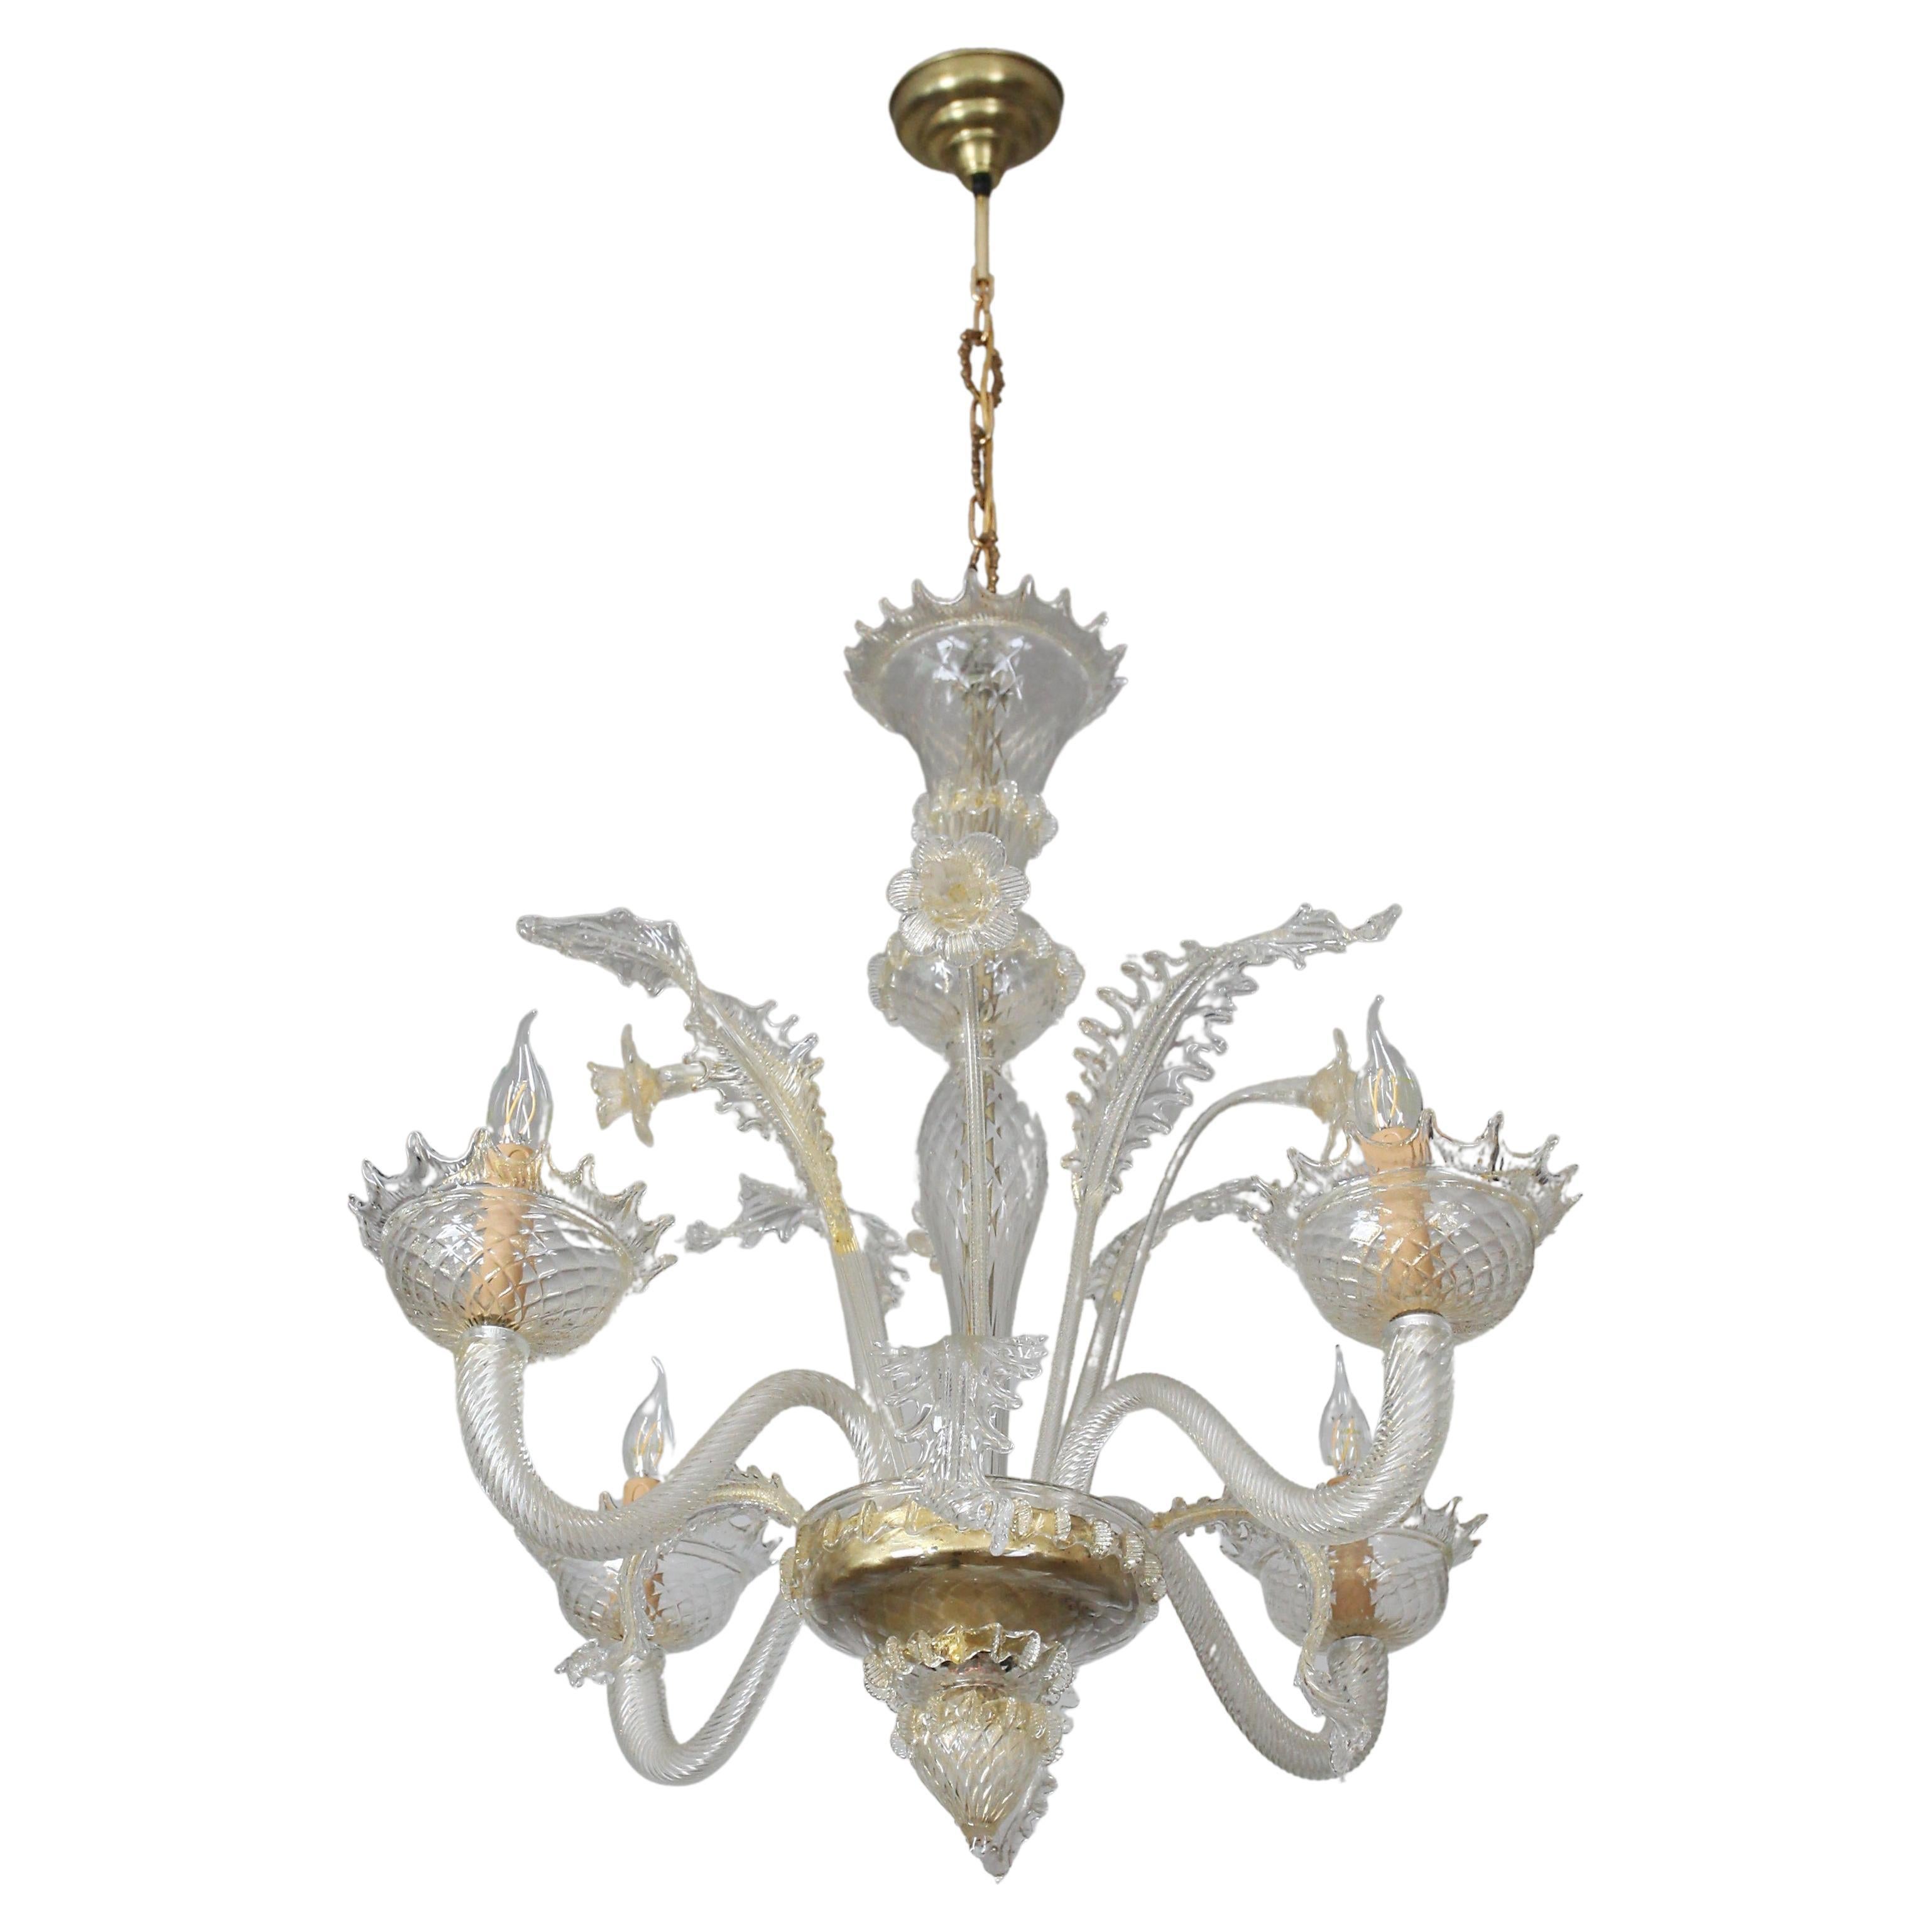 Venetian chandelier - restored For Sale